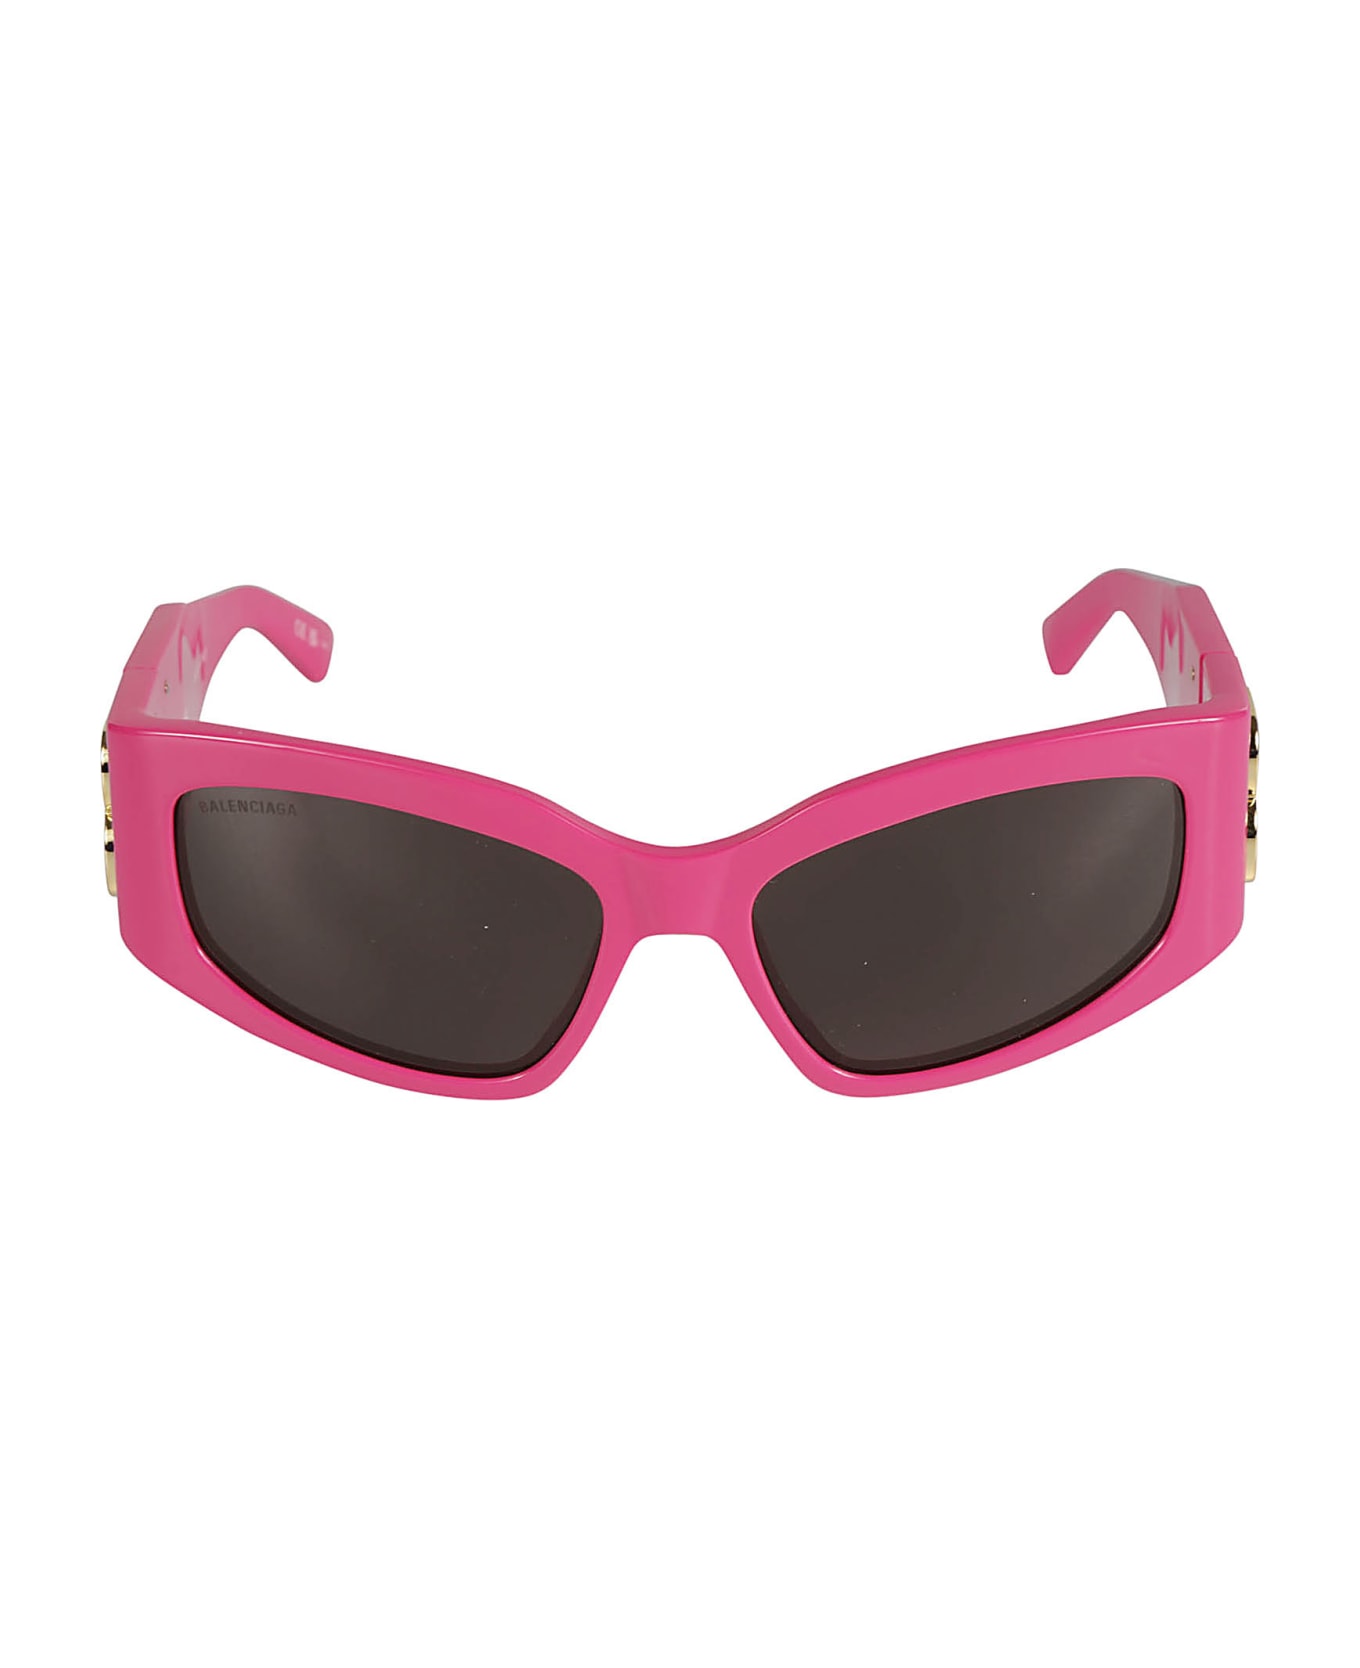 Balenciaga Eyewear Bb Hinge Cat-eye Sunglasses - Rosa サングラス